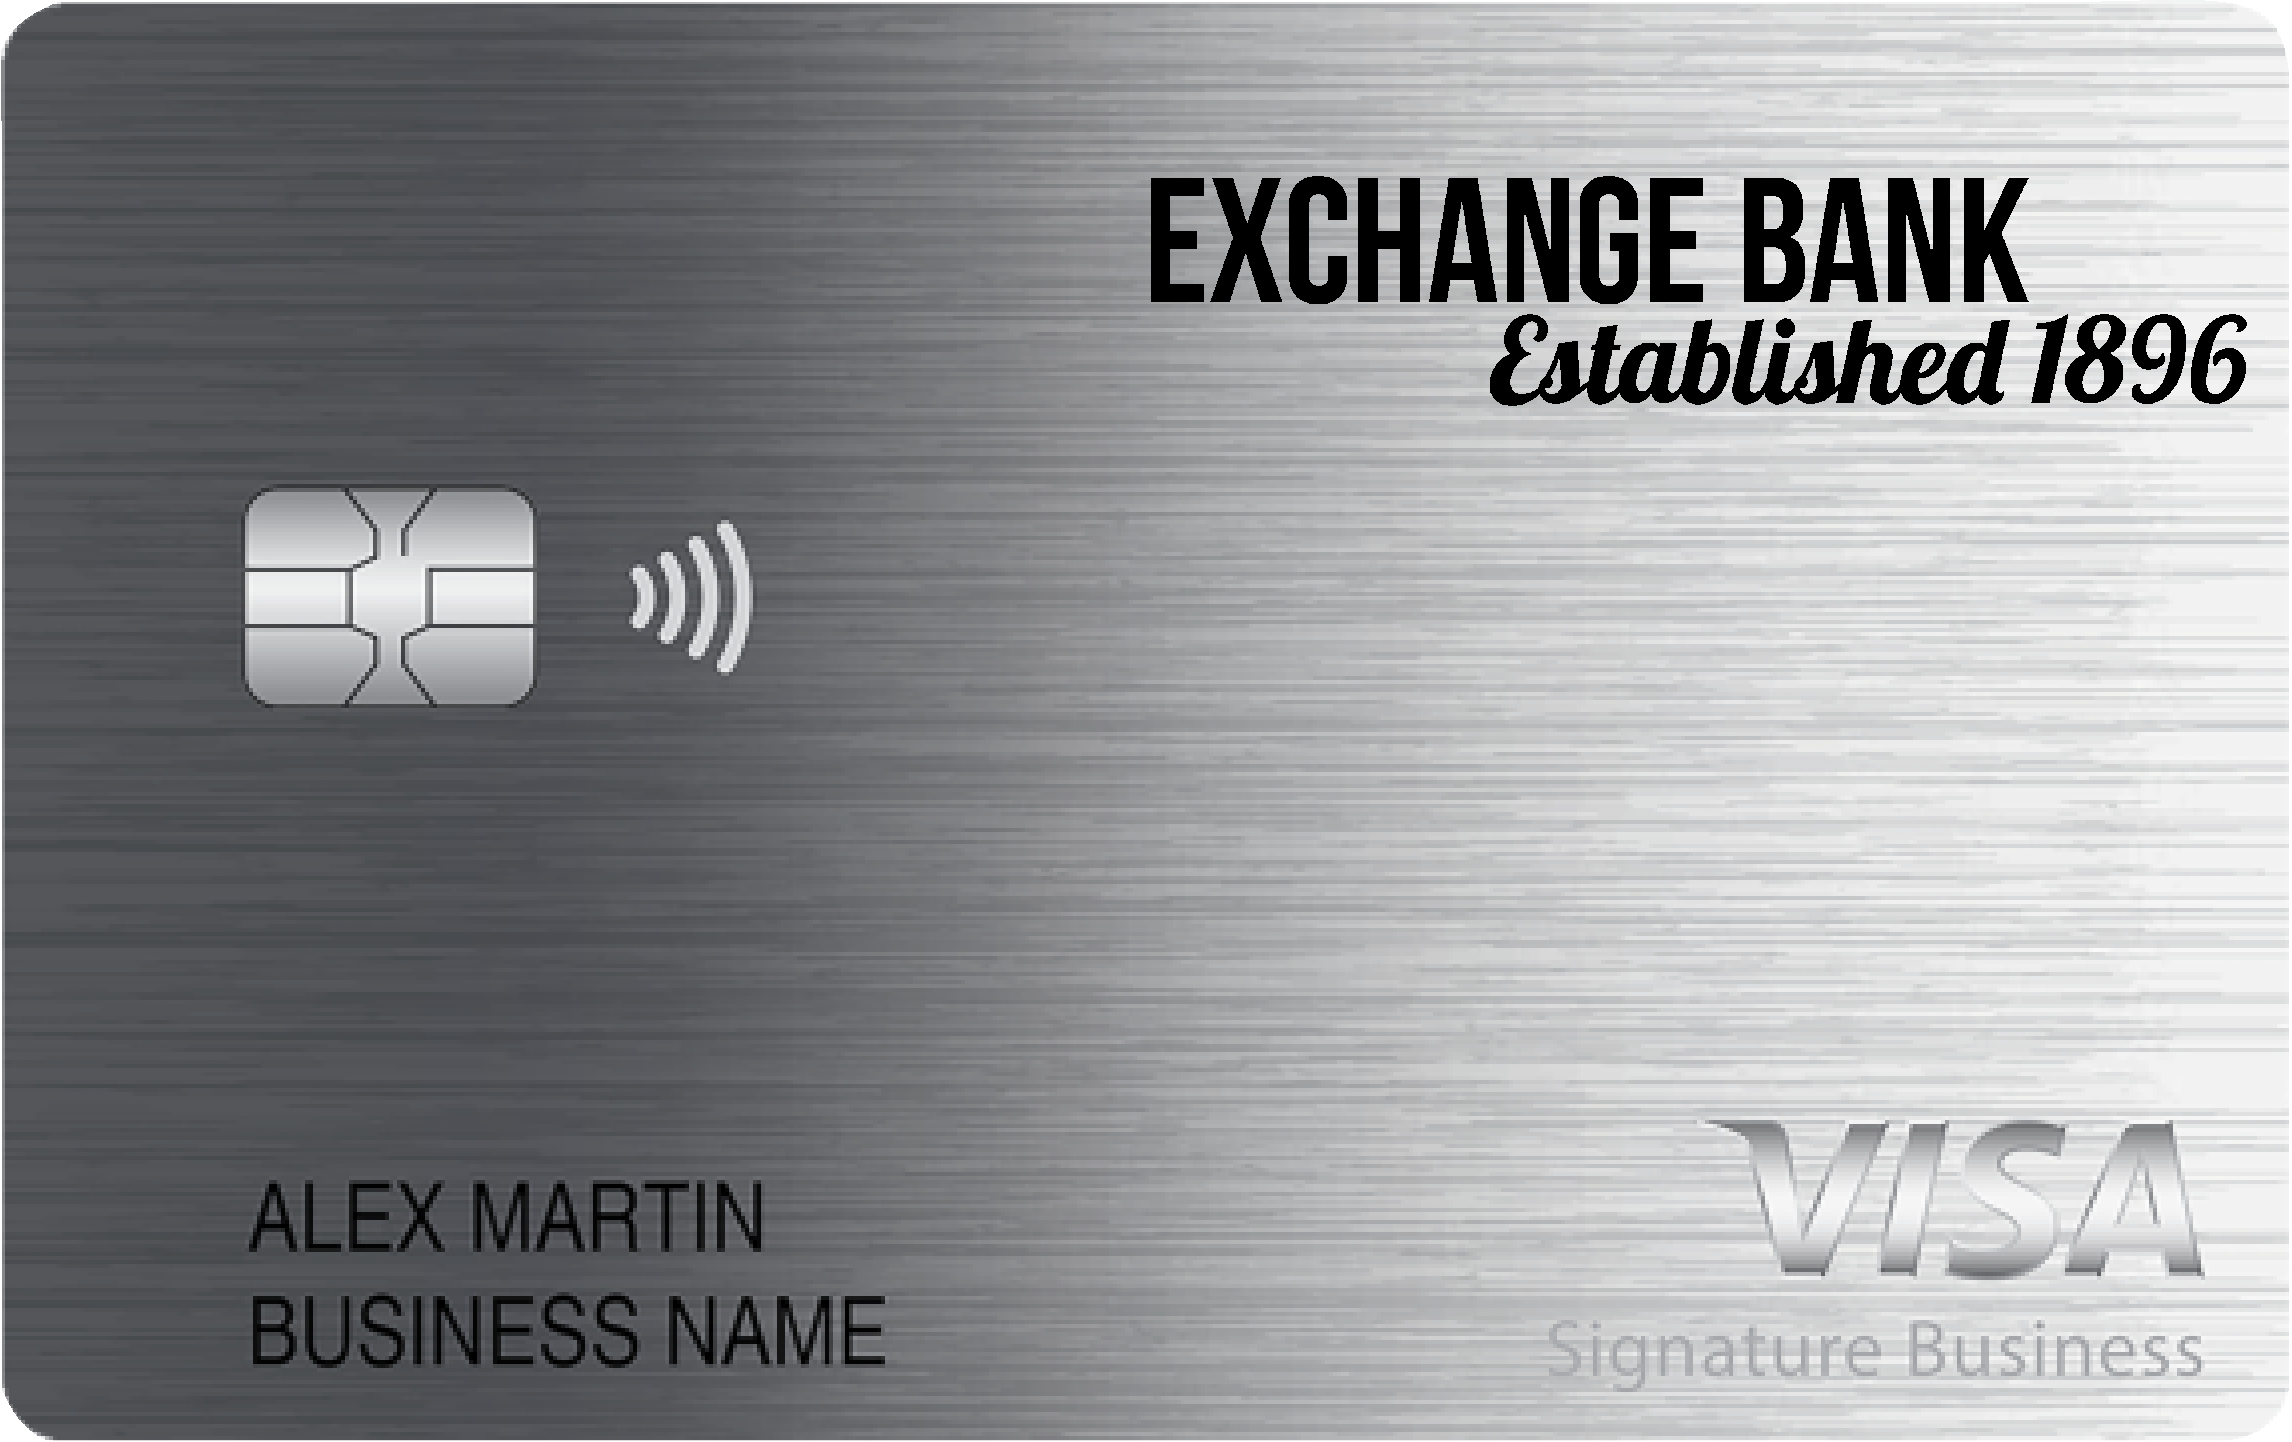 Exchange Bank Smart Business Rewards Card